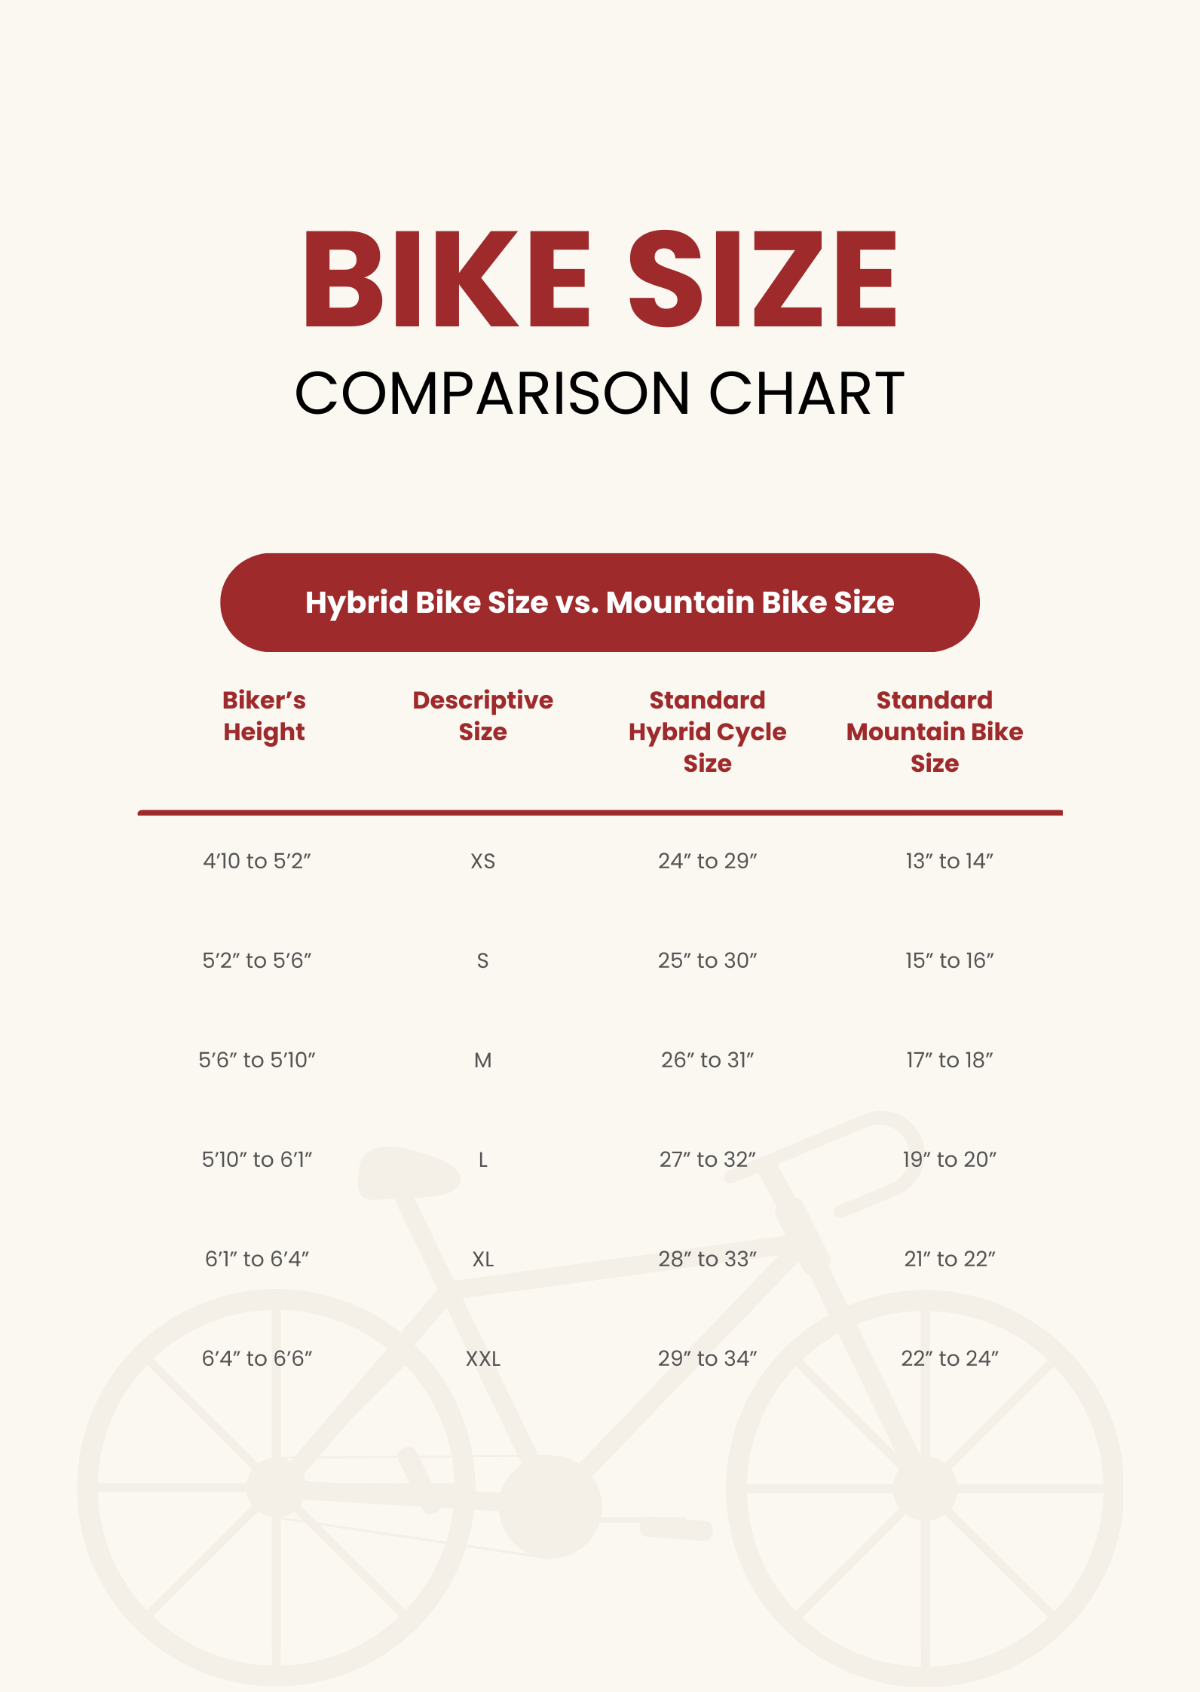 Bike Size Comparison Chart Template